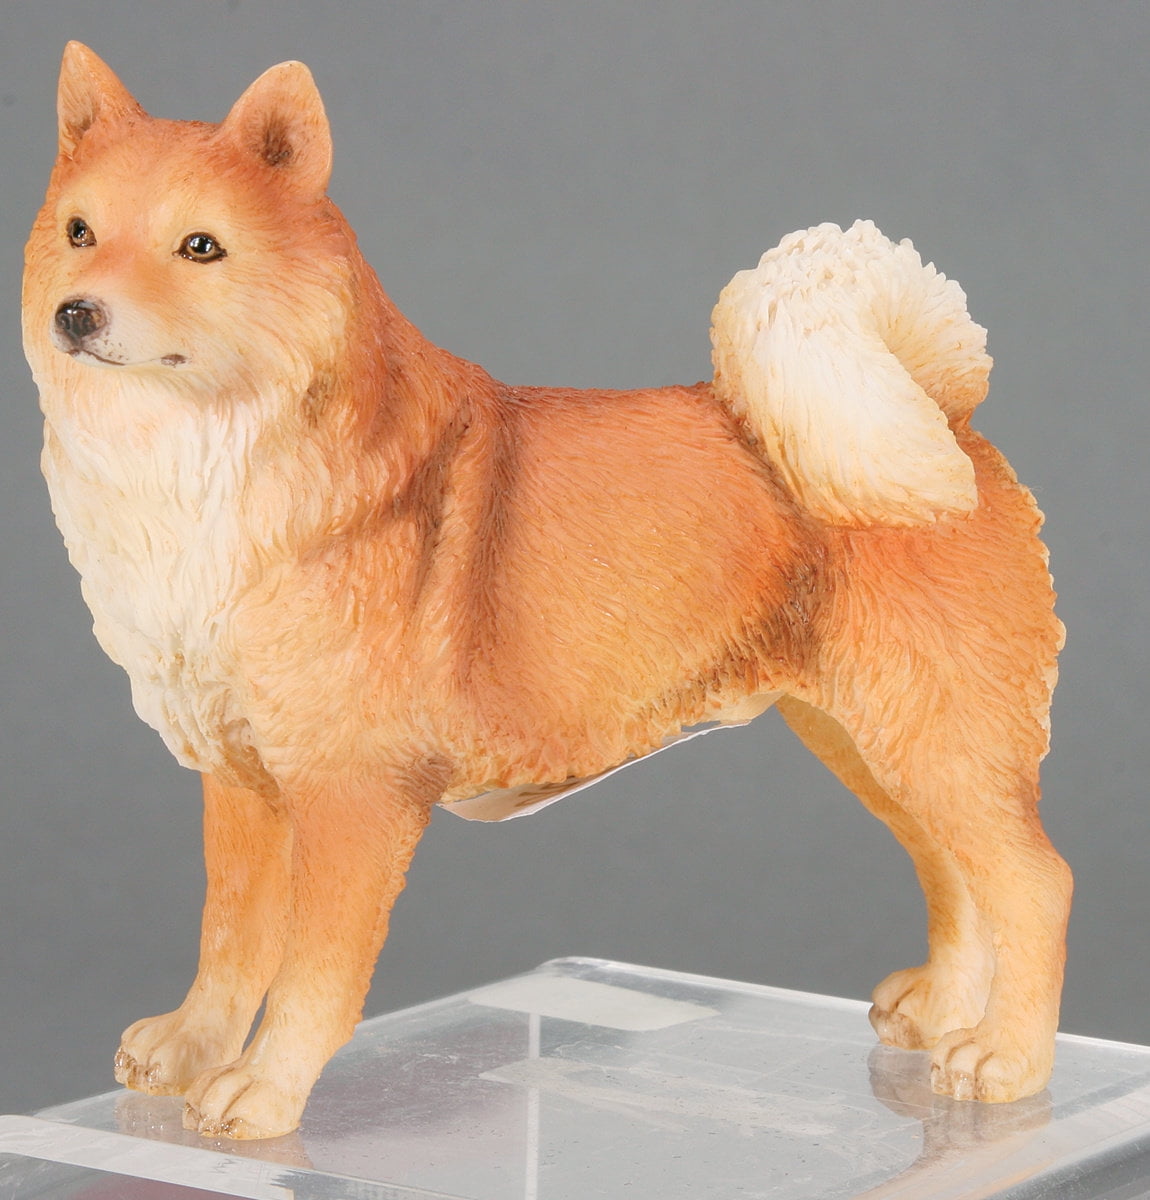 FINNISH SPITZ puppy TiNY dog FIGURINE Resin MINIATURE Mini COLLECTIBLE Statue 